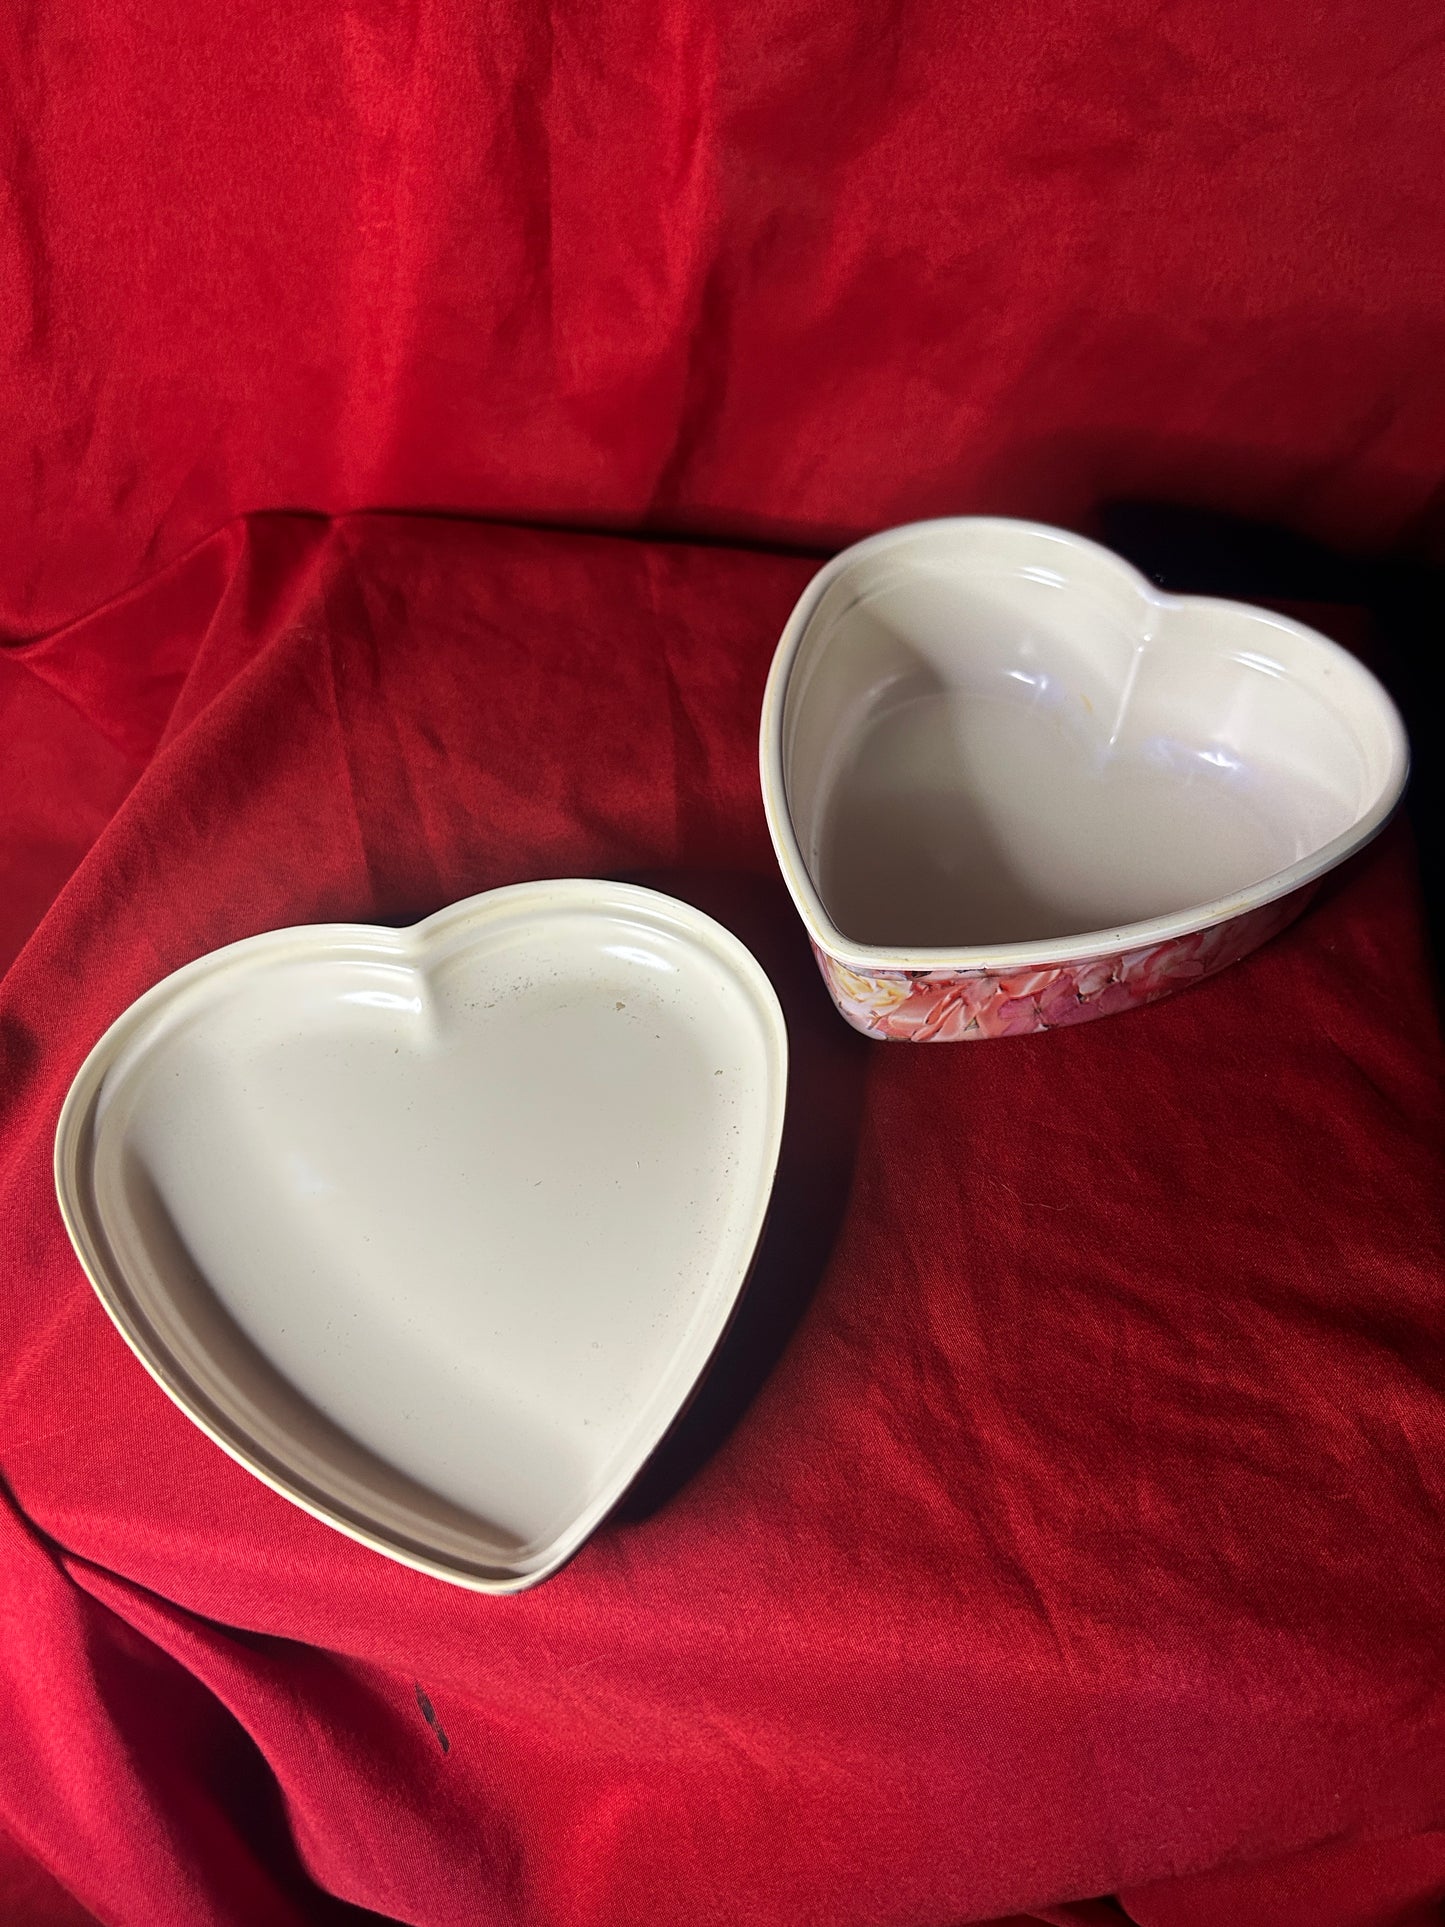 Single Ullman Co. Heart Shaped Cherub Box